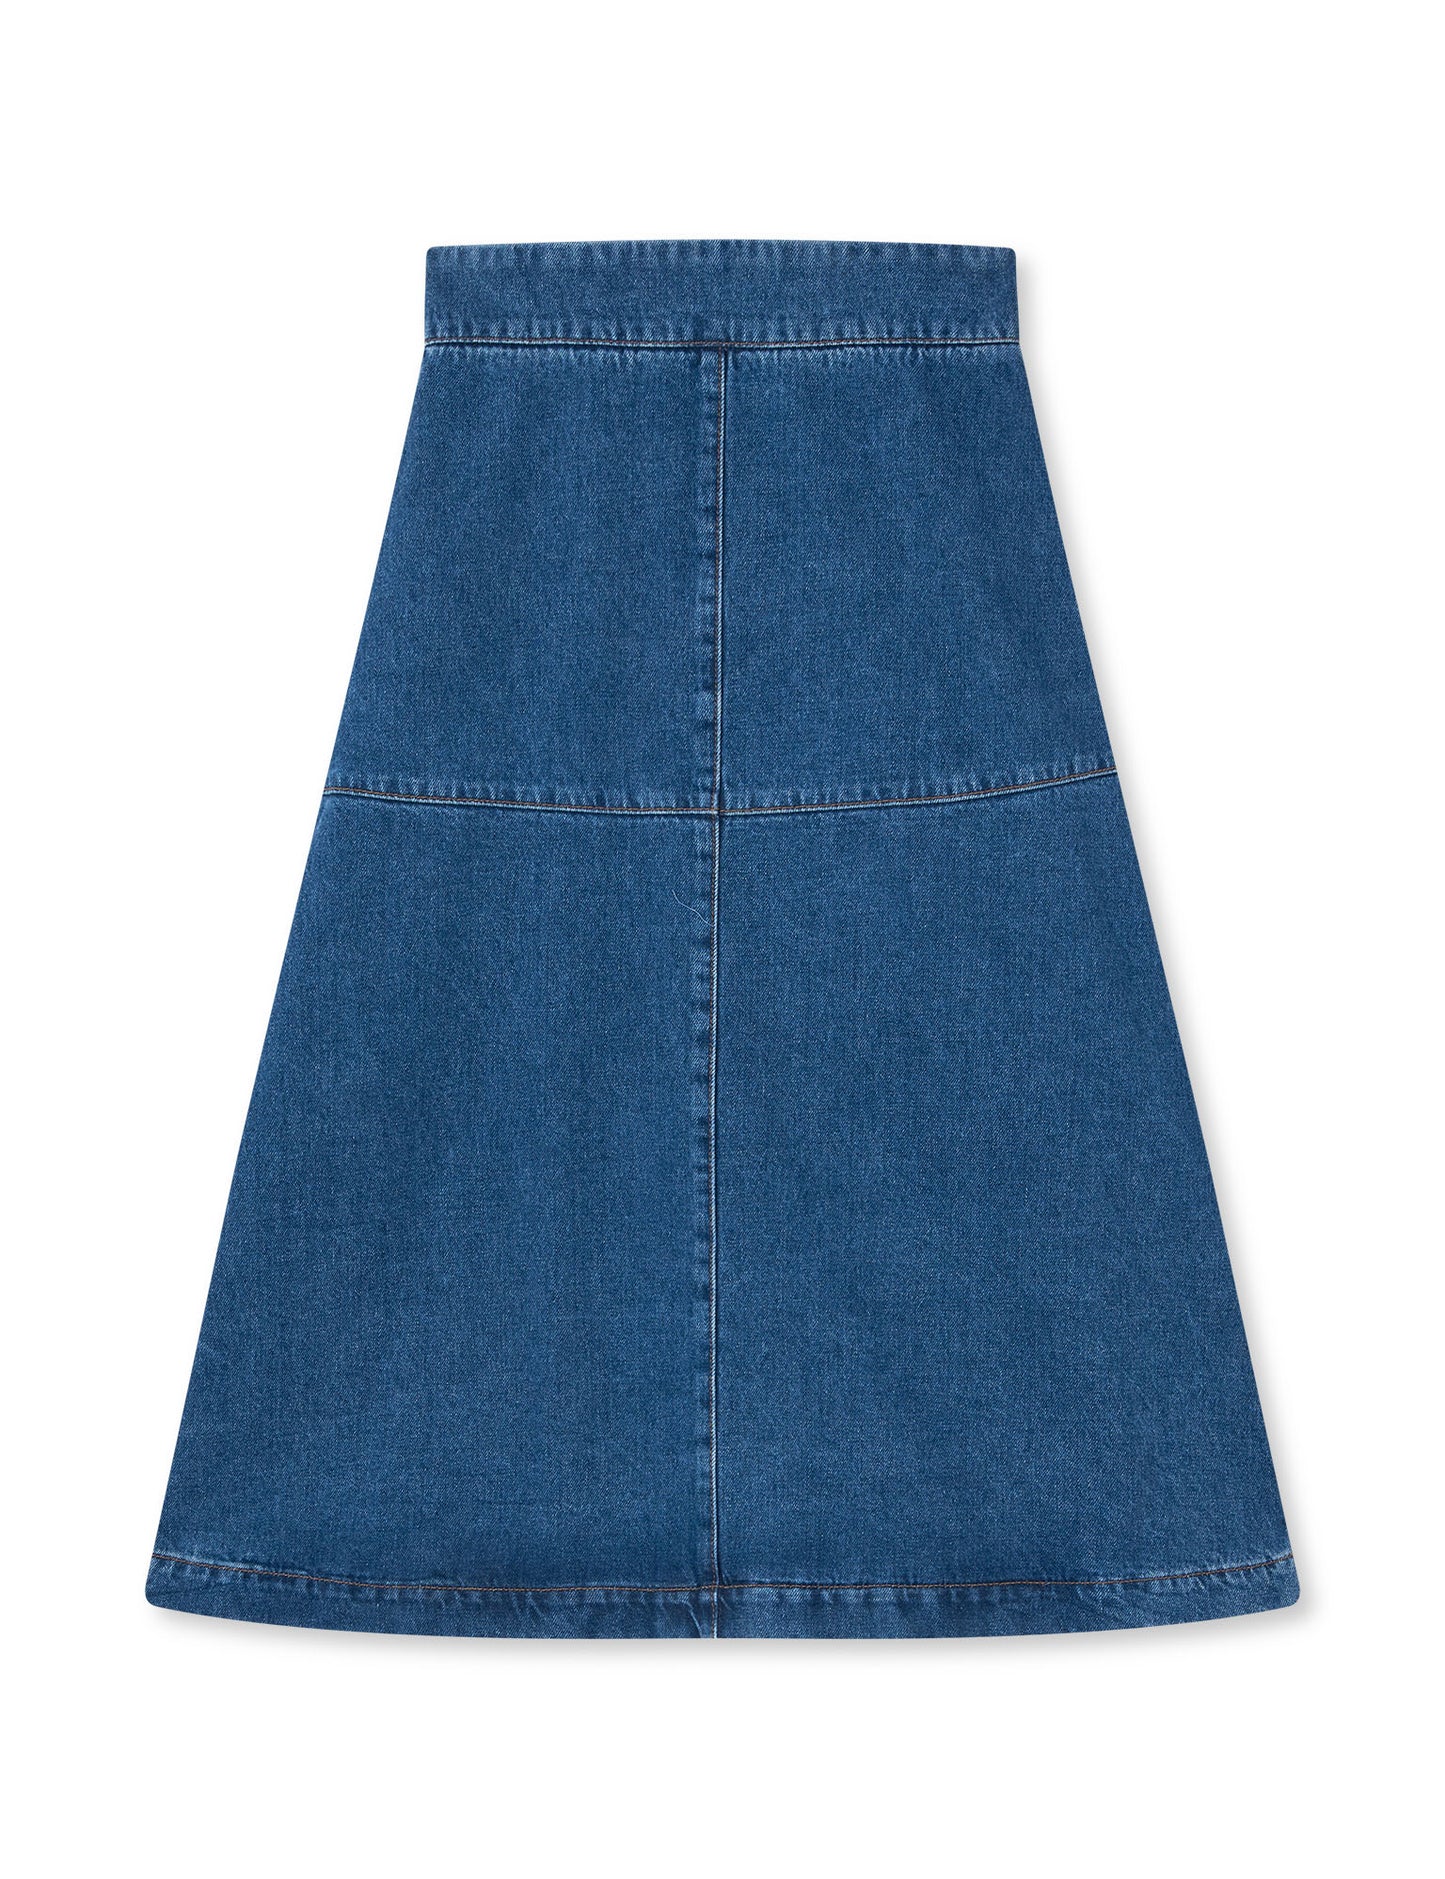 Denim Lunar Skirt, Vintage Blue